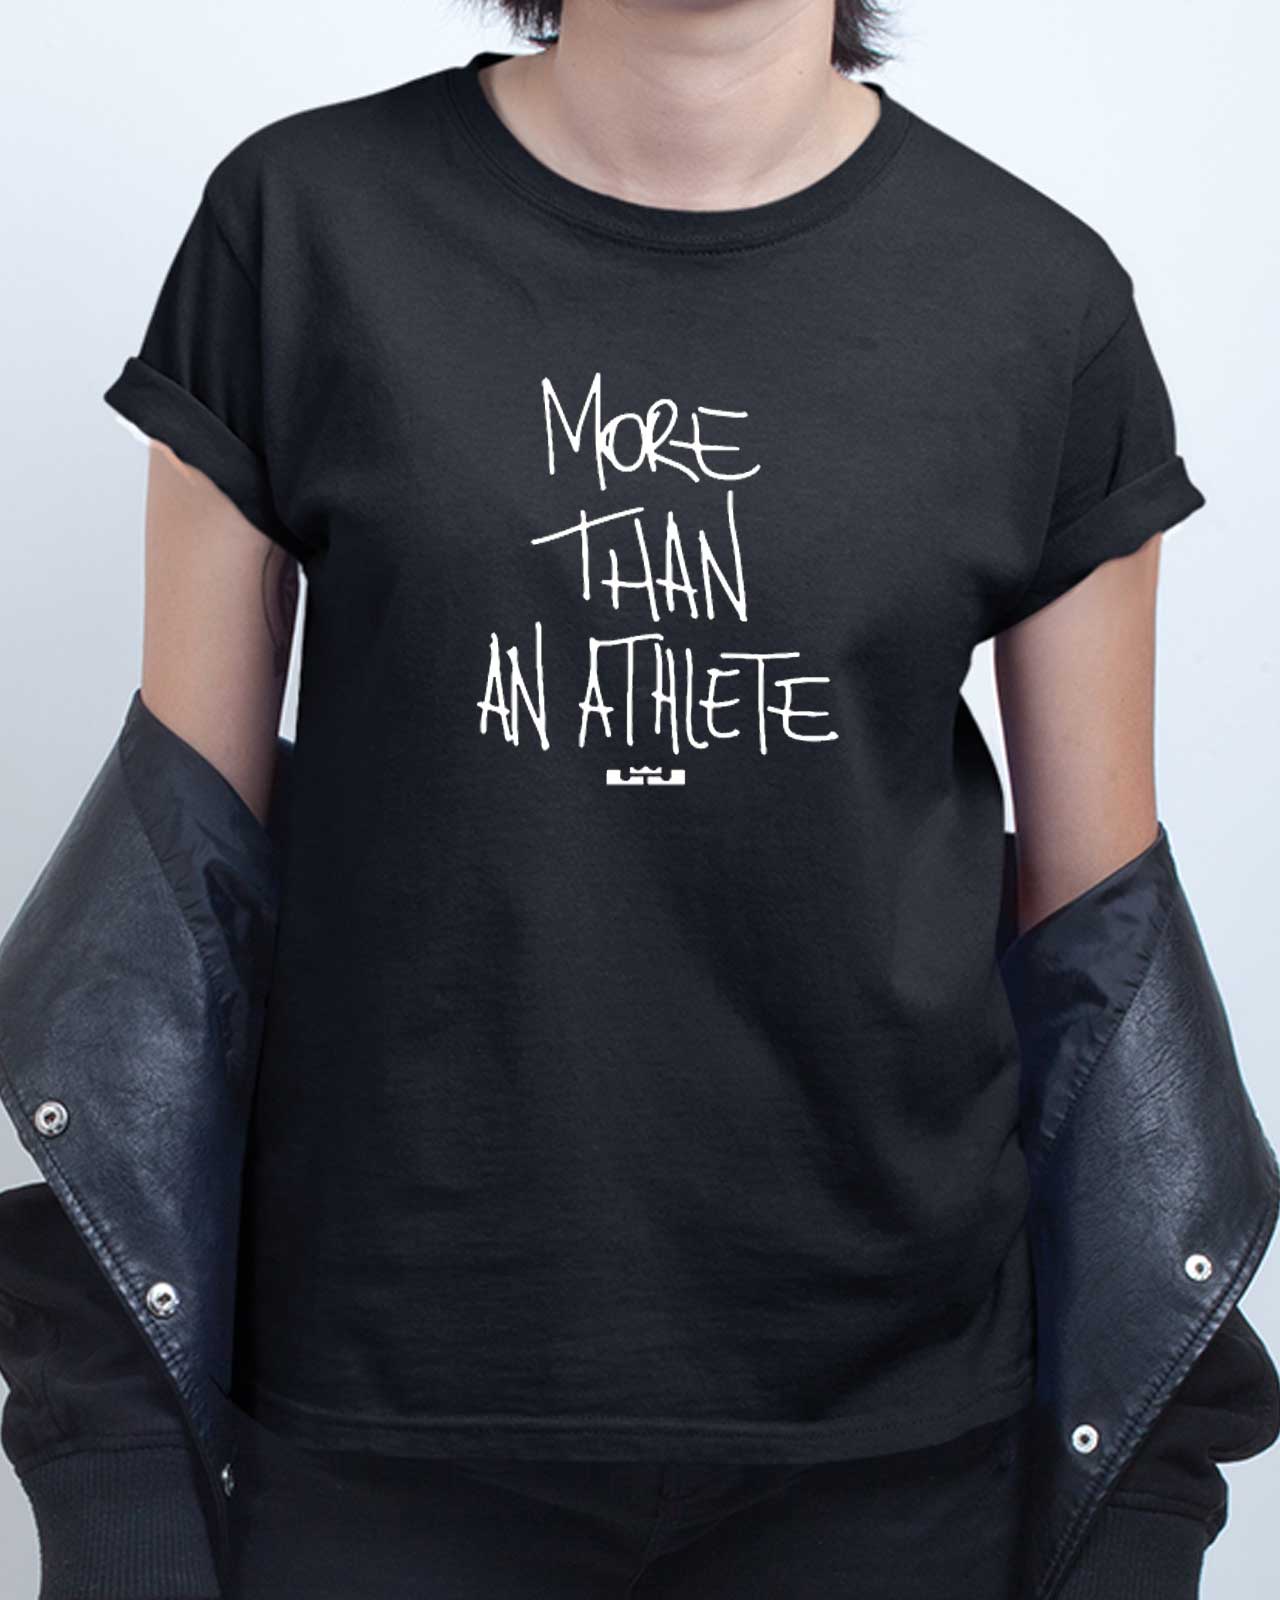 t shirt more than an athlete